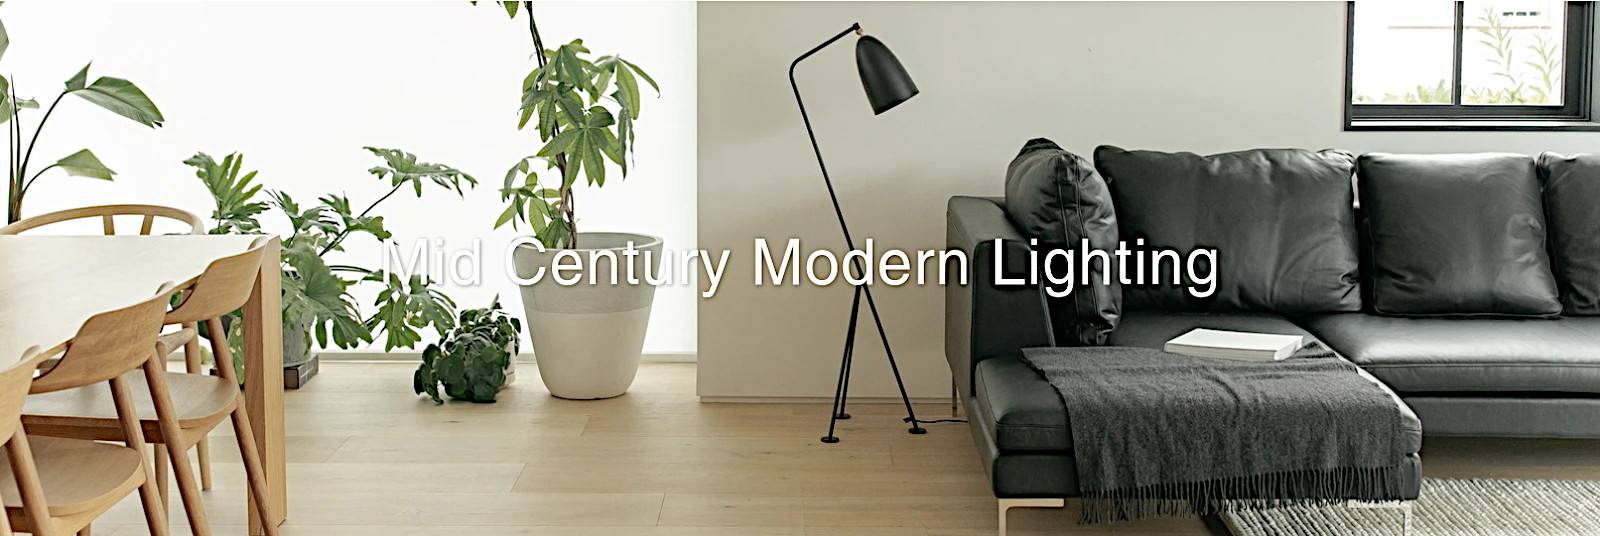 mid century modern lighting closeout